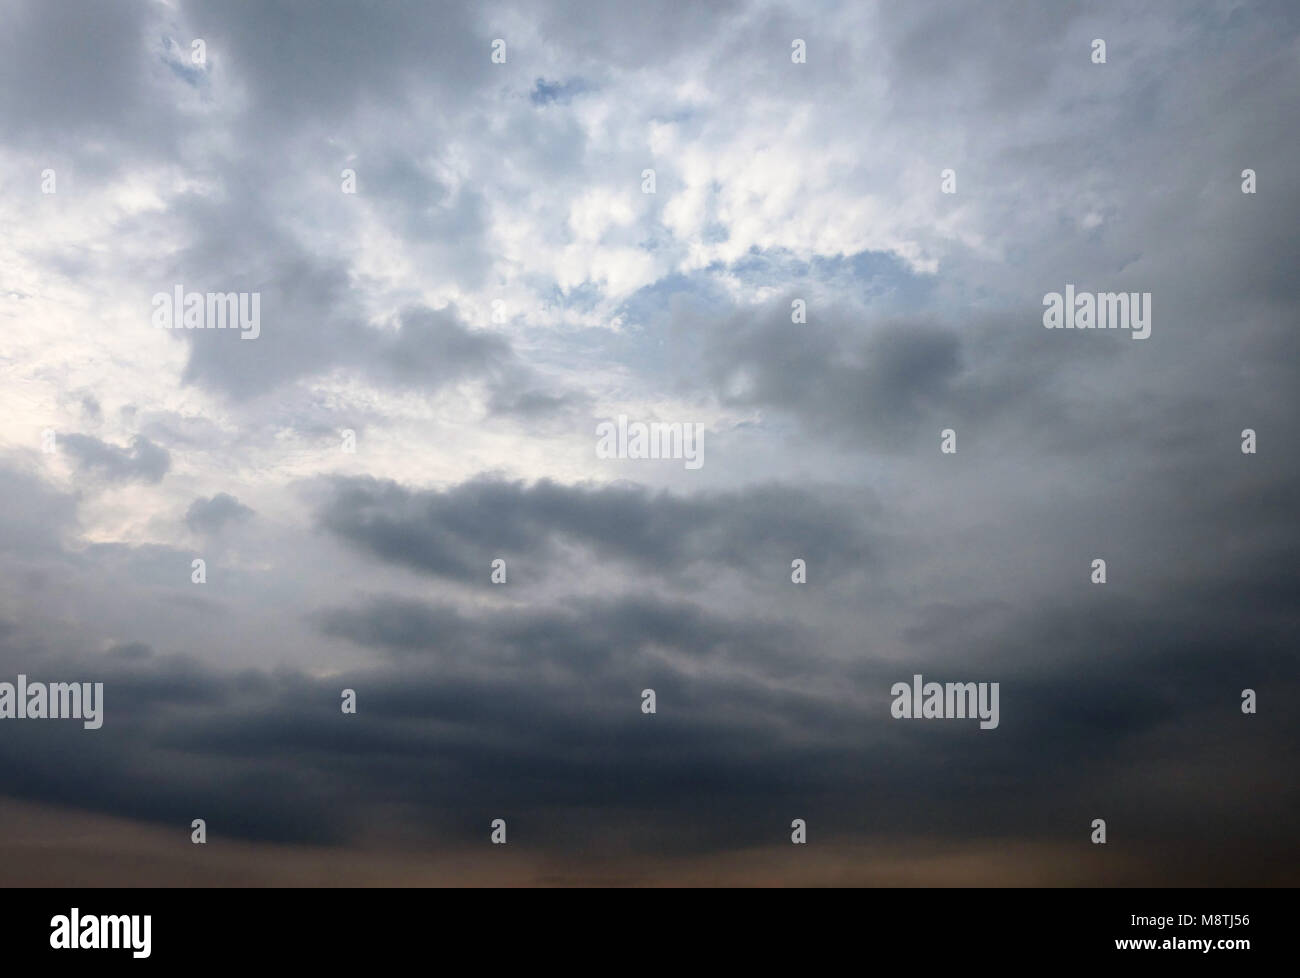 Dramatic rainy sky, storm background Stock Photo